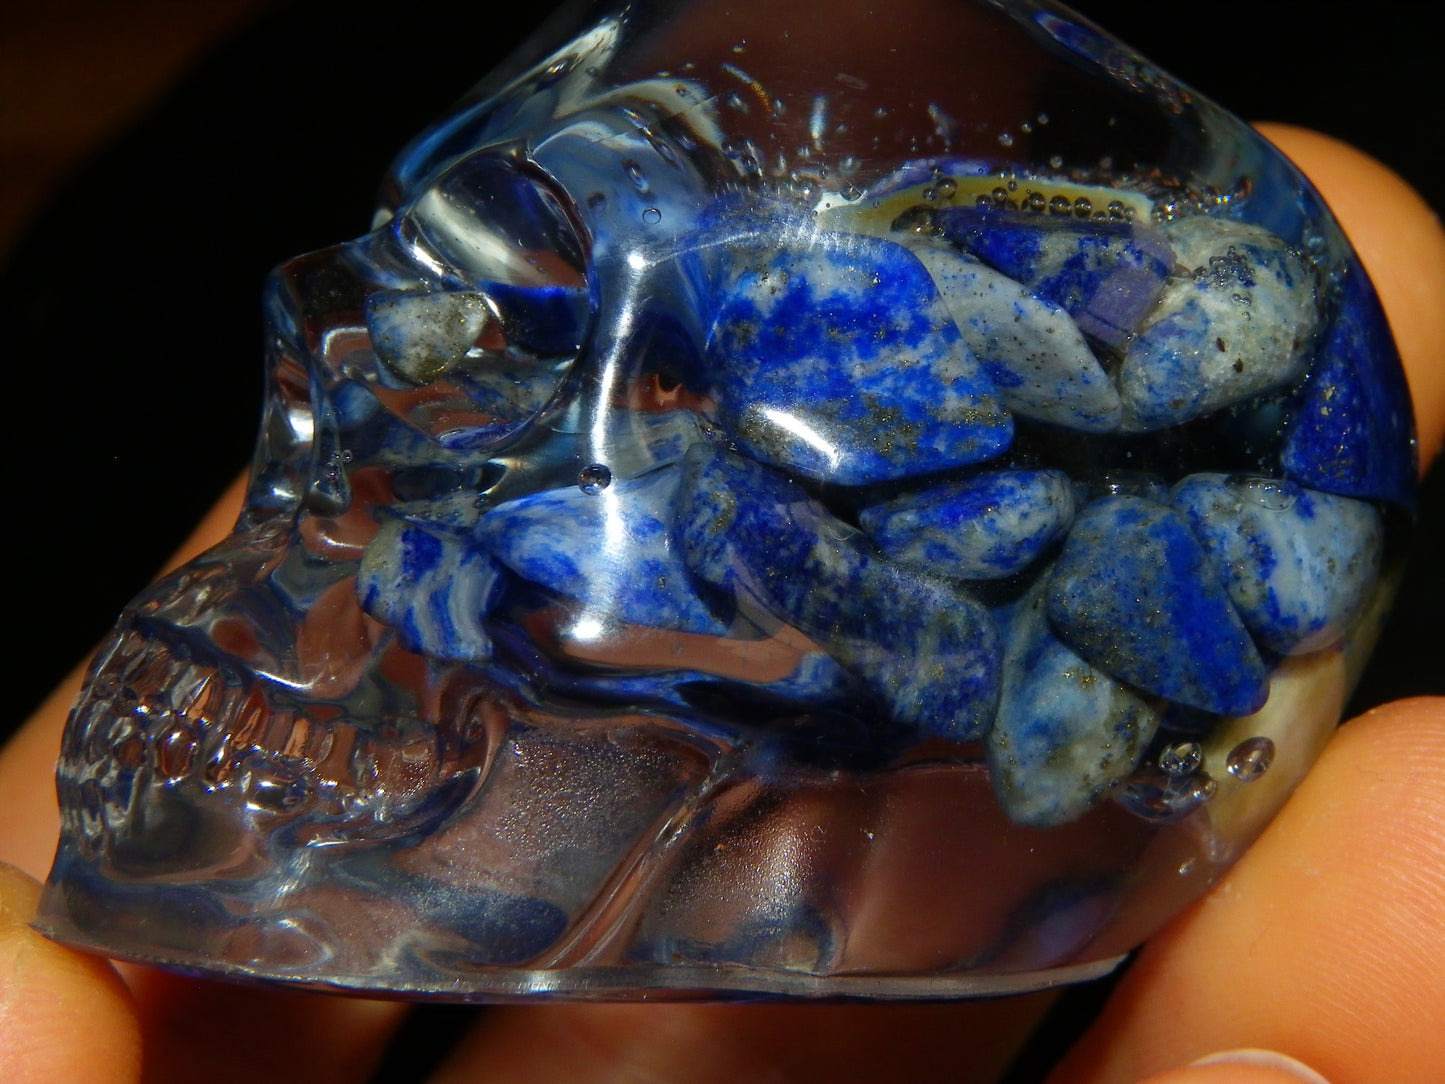 2 Nice Stone + Resin Skull Ornaments 550cts Ruby Zoisite + Lapis Lazuli :)